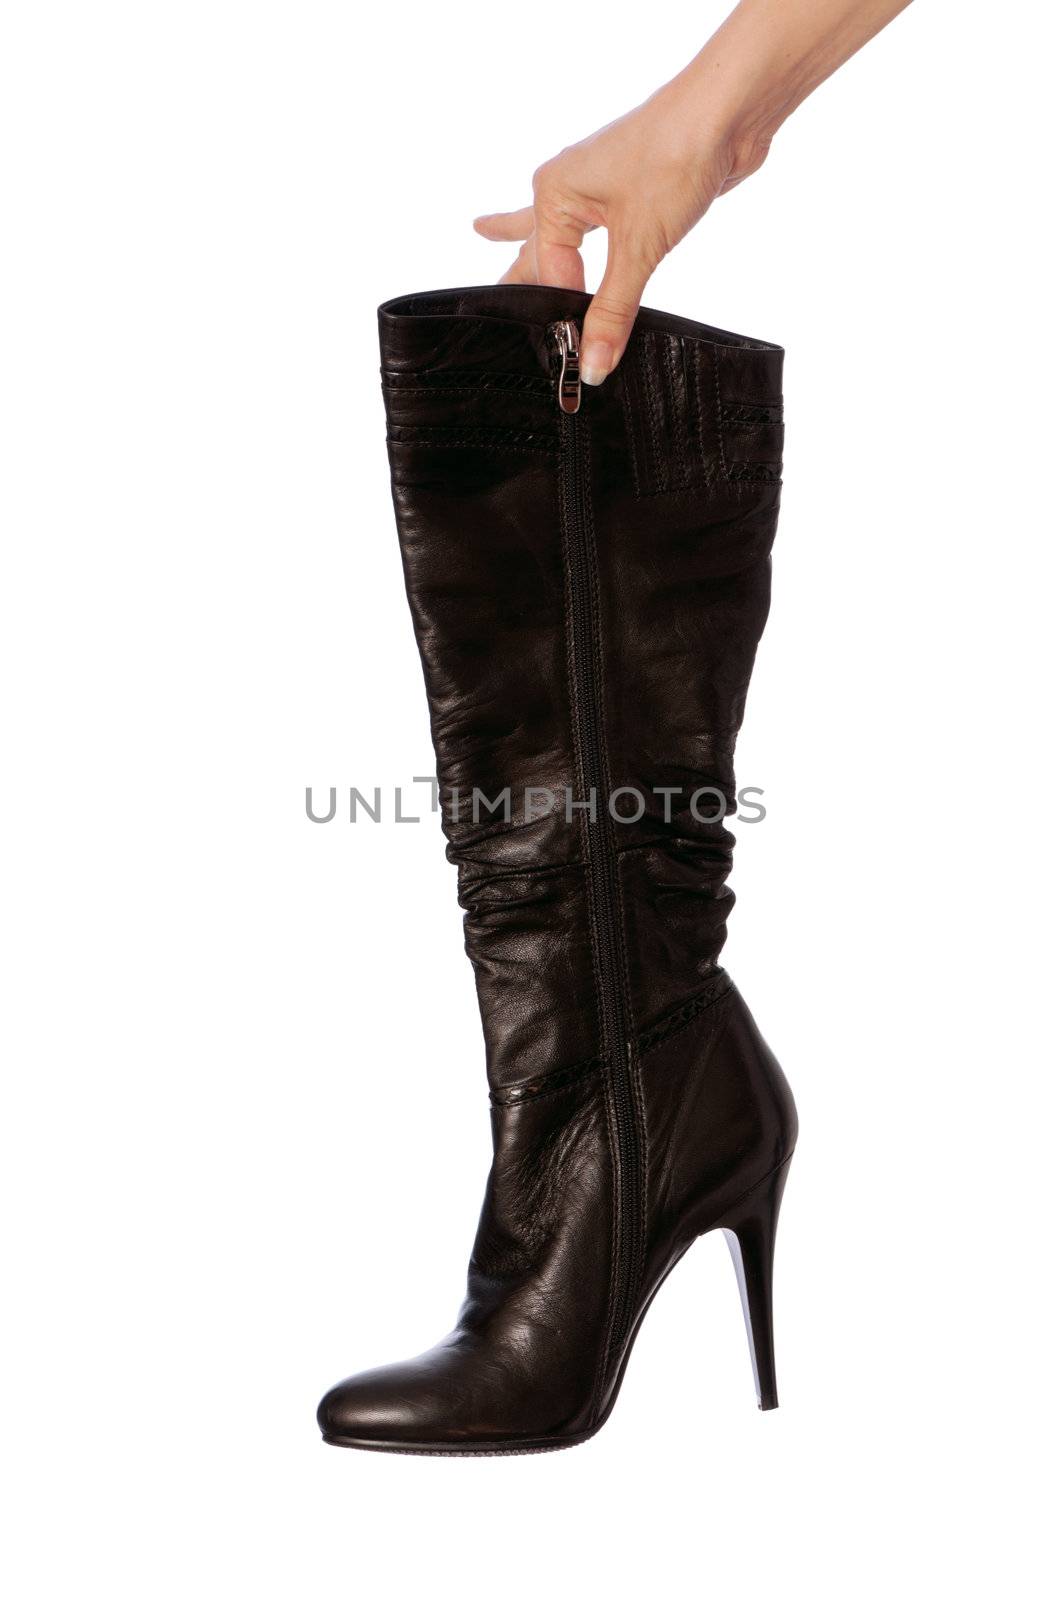 black leather high heel stiletto fetish boots